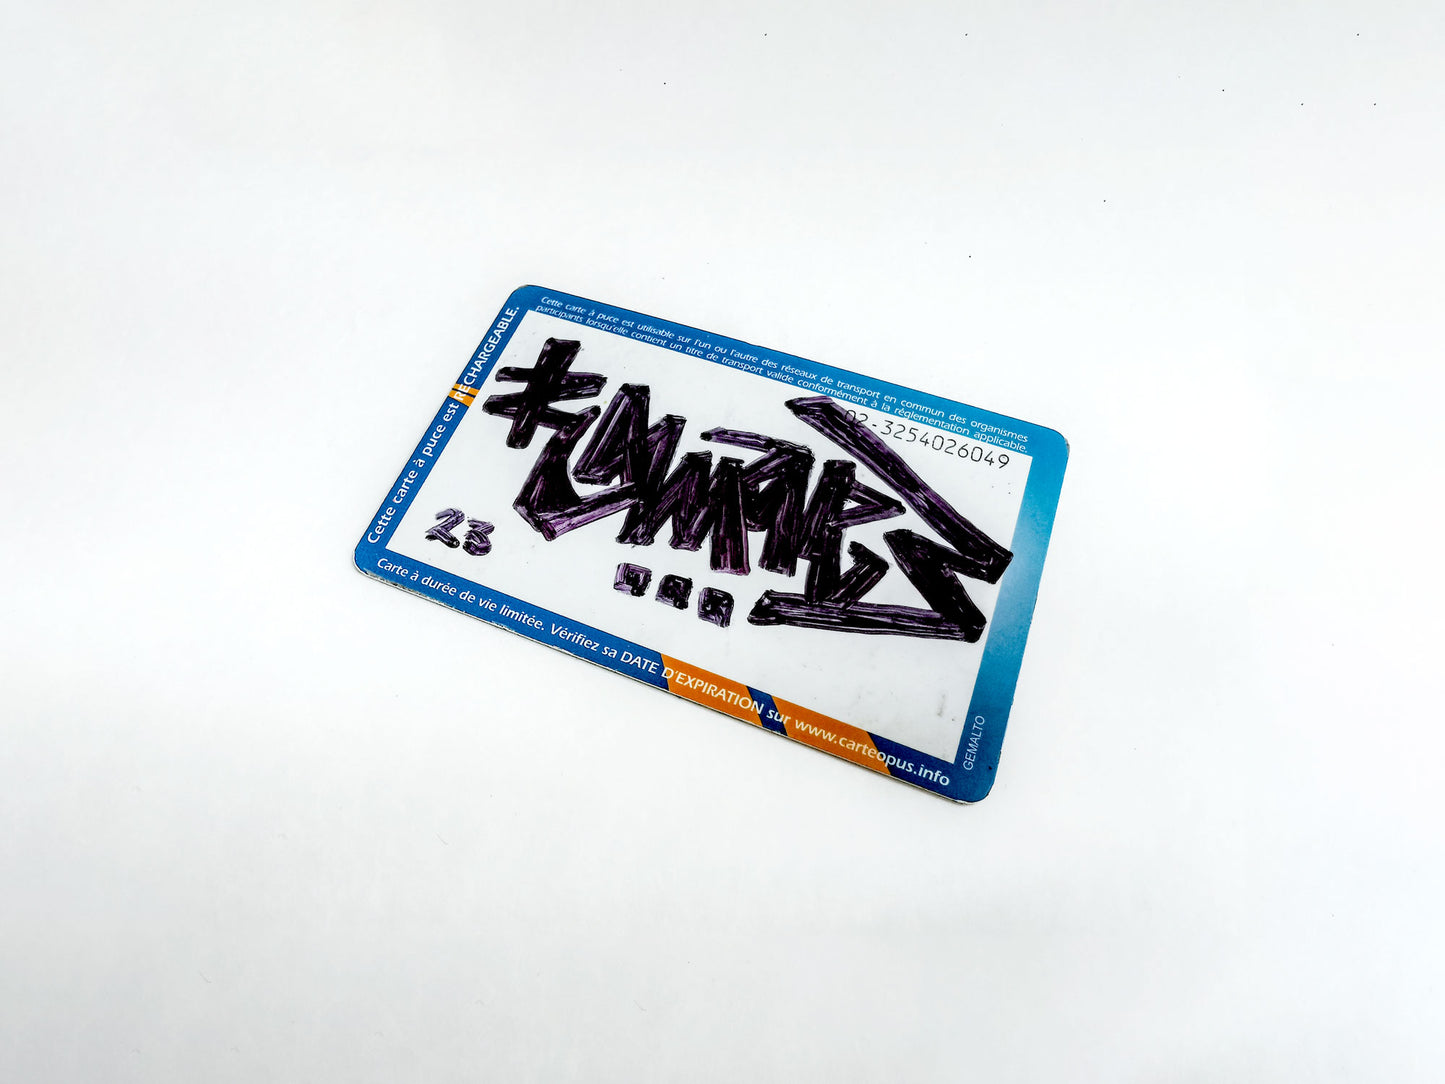 Art Object Opus Card - "Opusone"